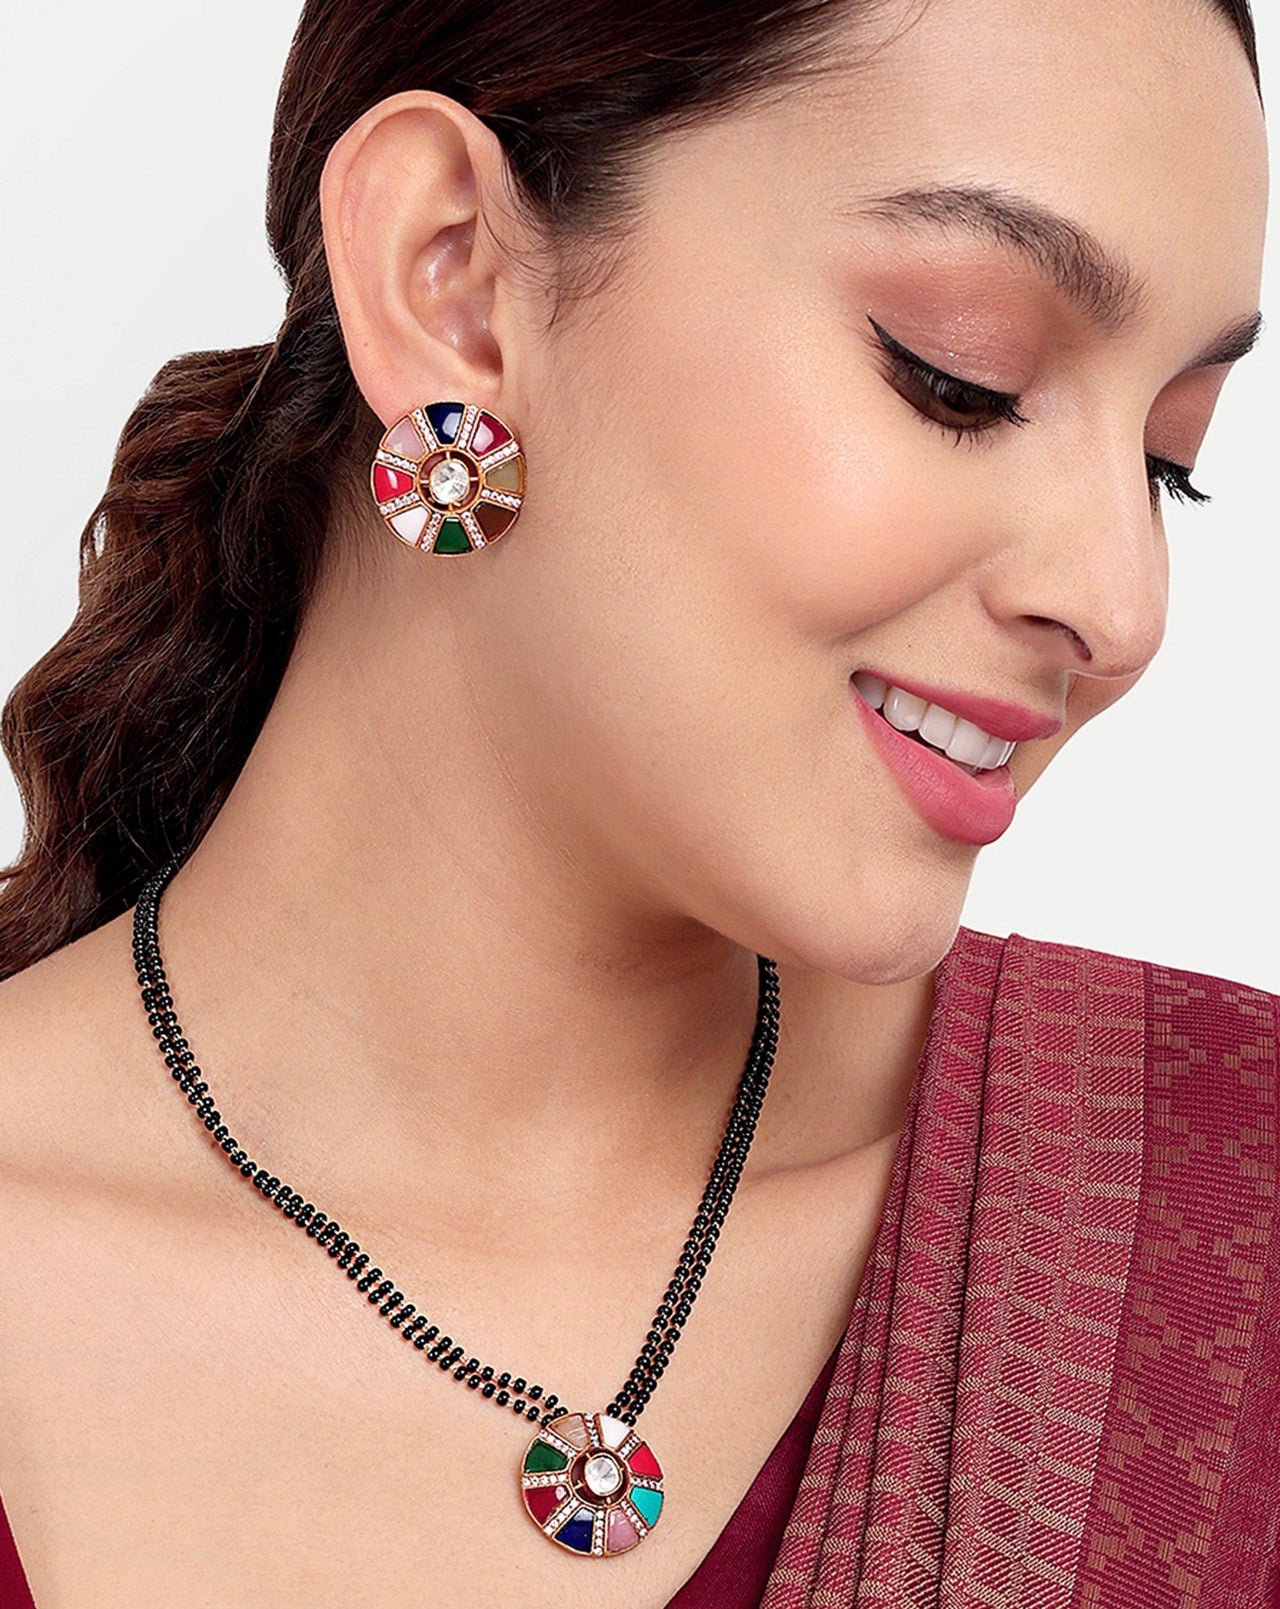 Beautiful Navratna Round Pendant & Earrings - Abdesignsjewellery